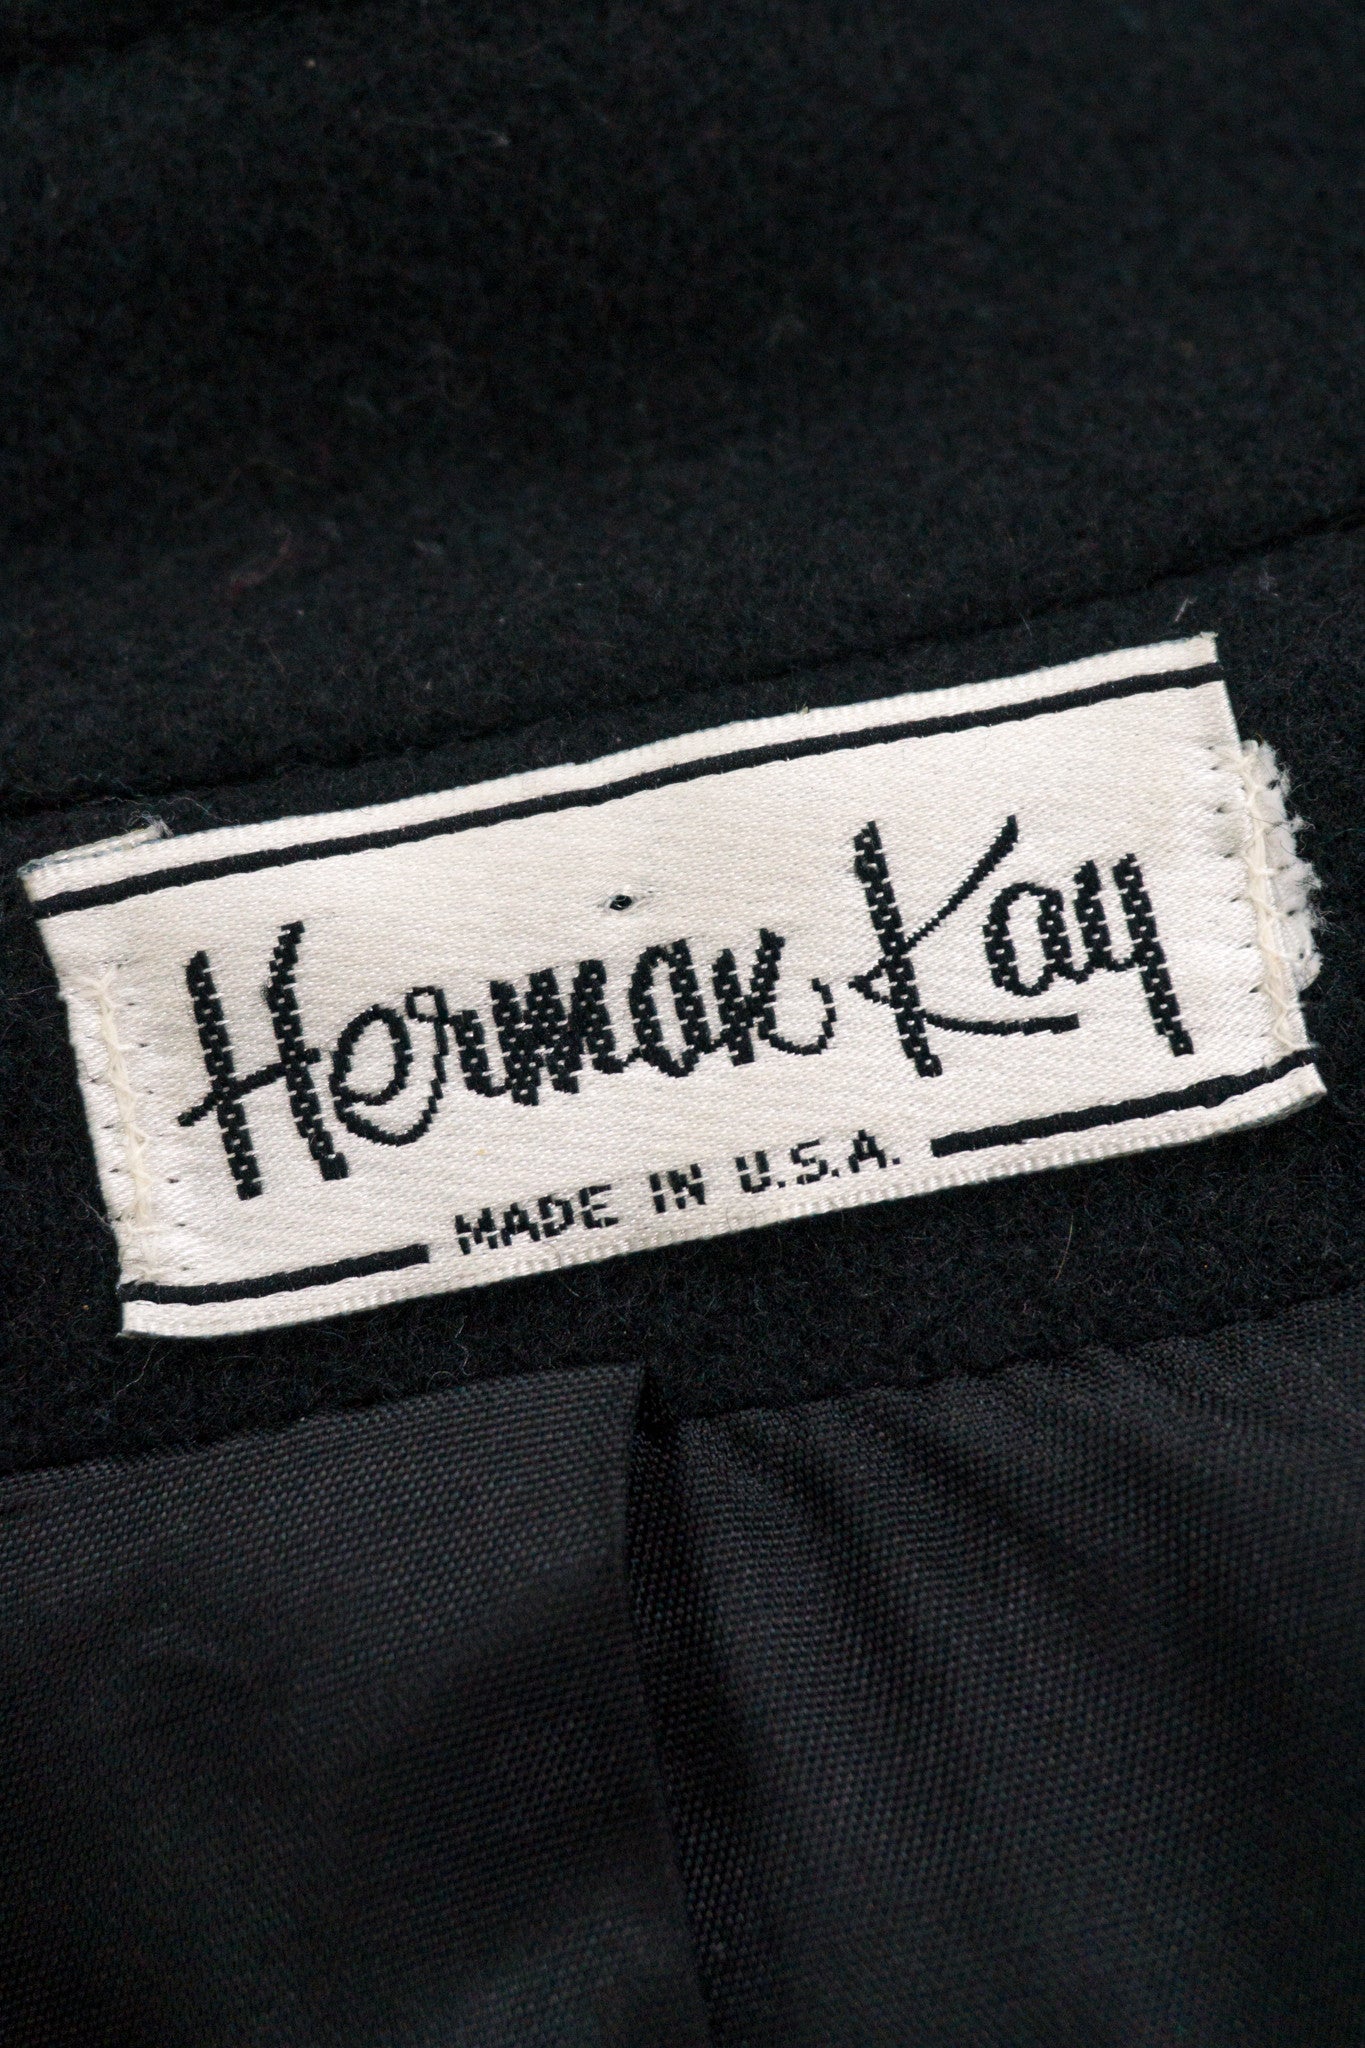 Herman Kay Label